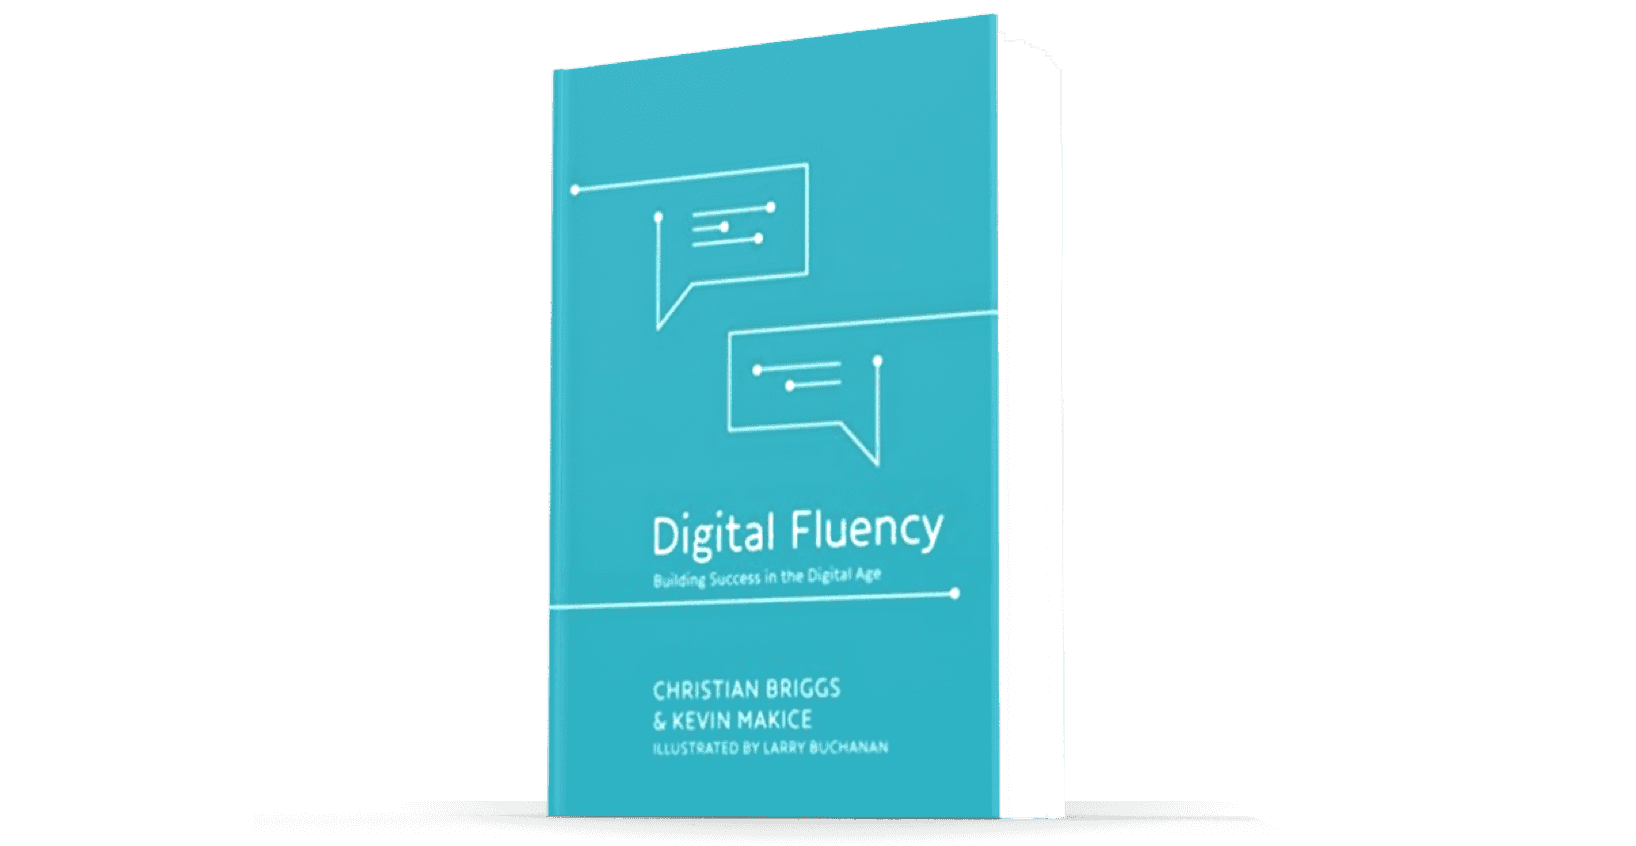 Digital Fluency book